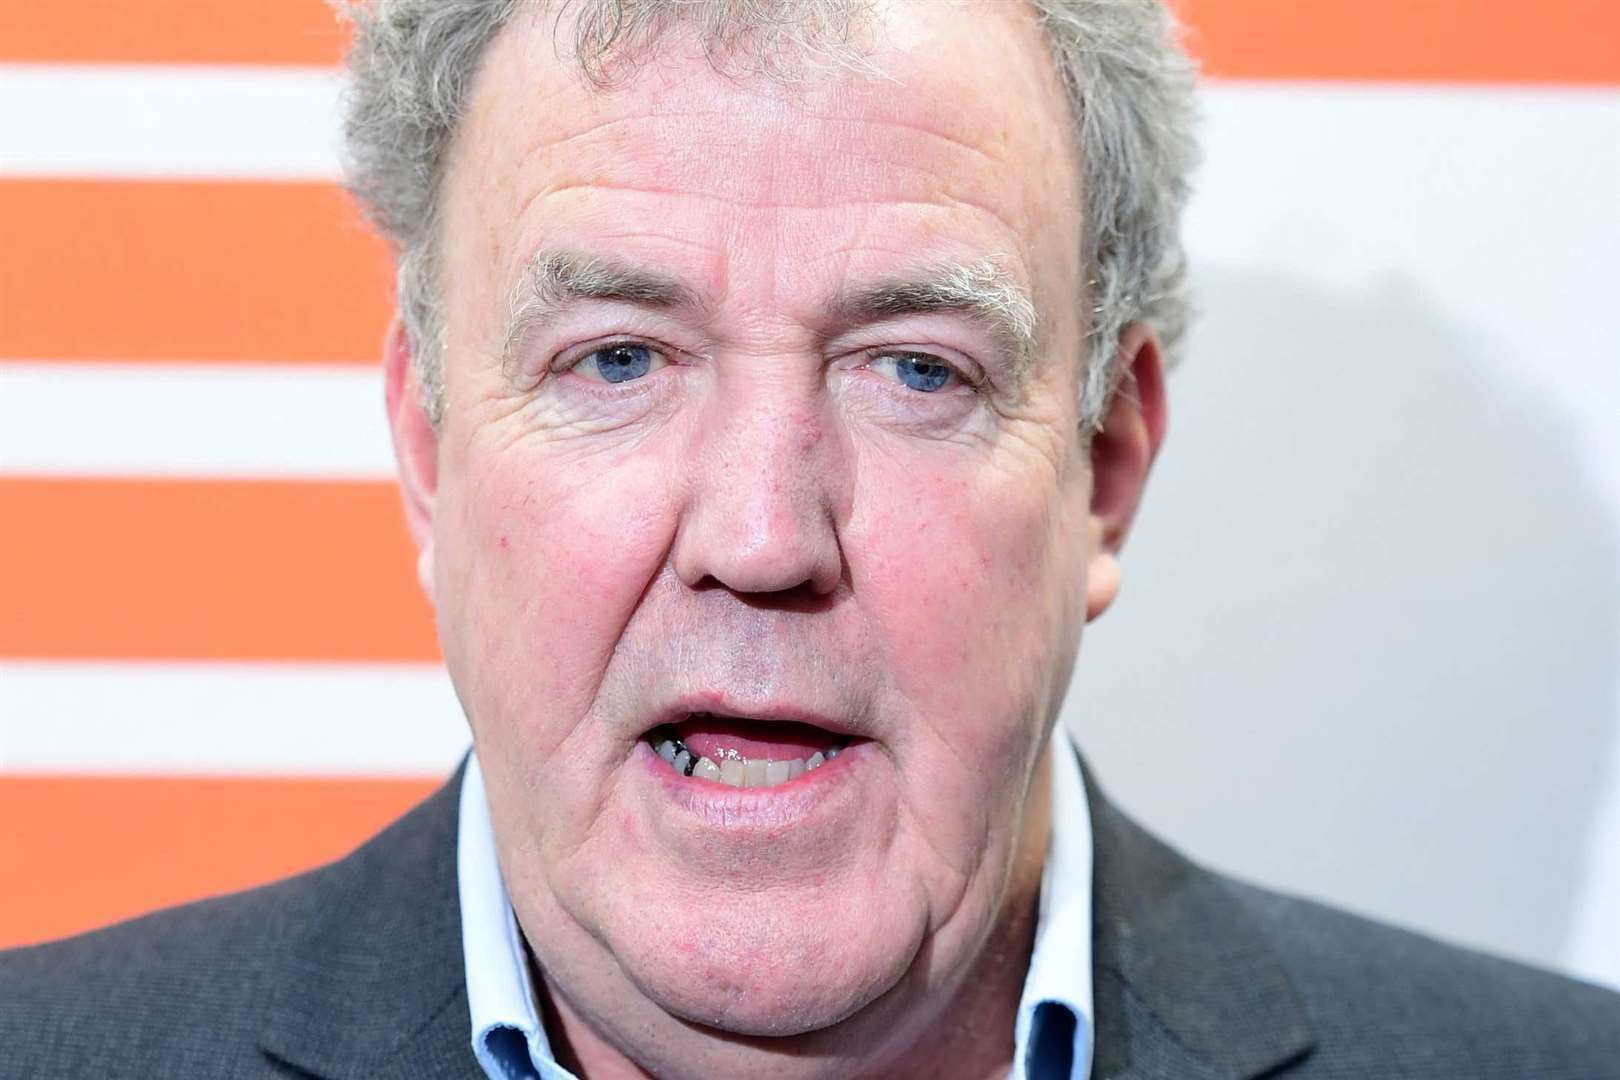 Jeremy Clarkson's violent rhetoric fuels hatred against women, writes our columnist Picture: PA